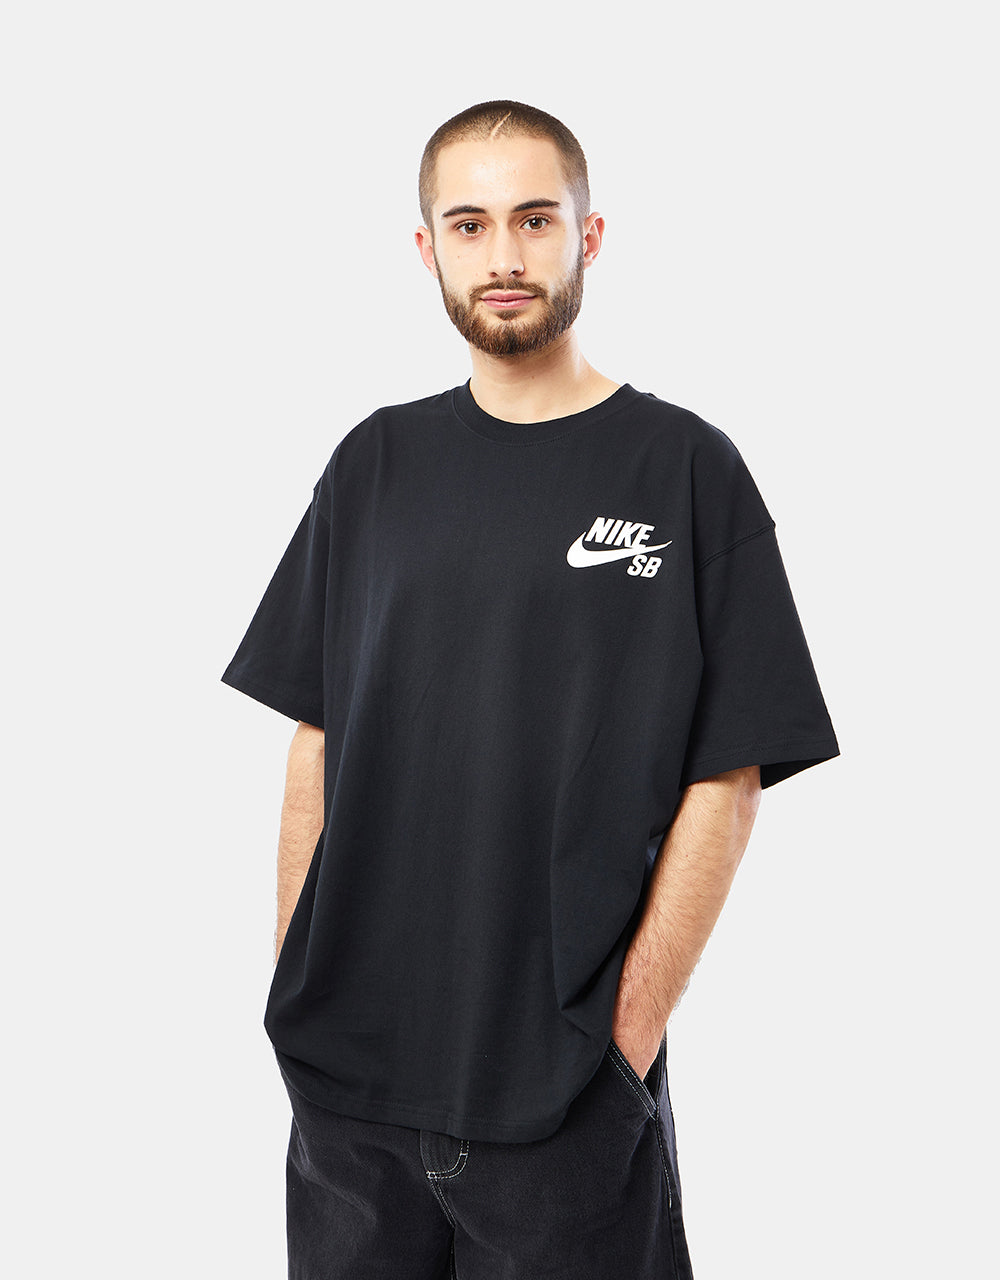 Nike SB Logo T-Shirt - Black/White